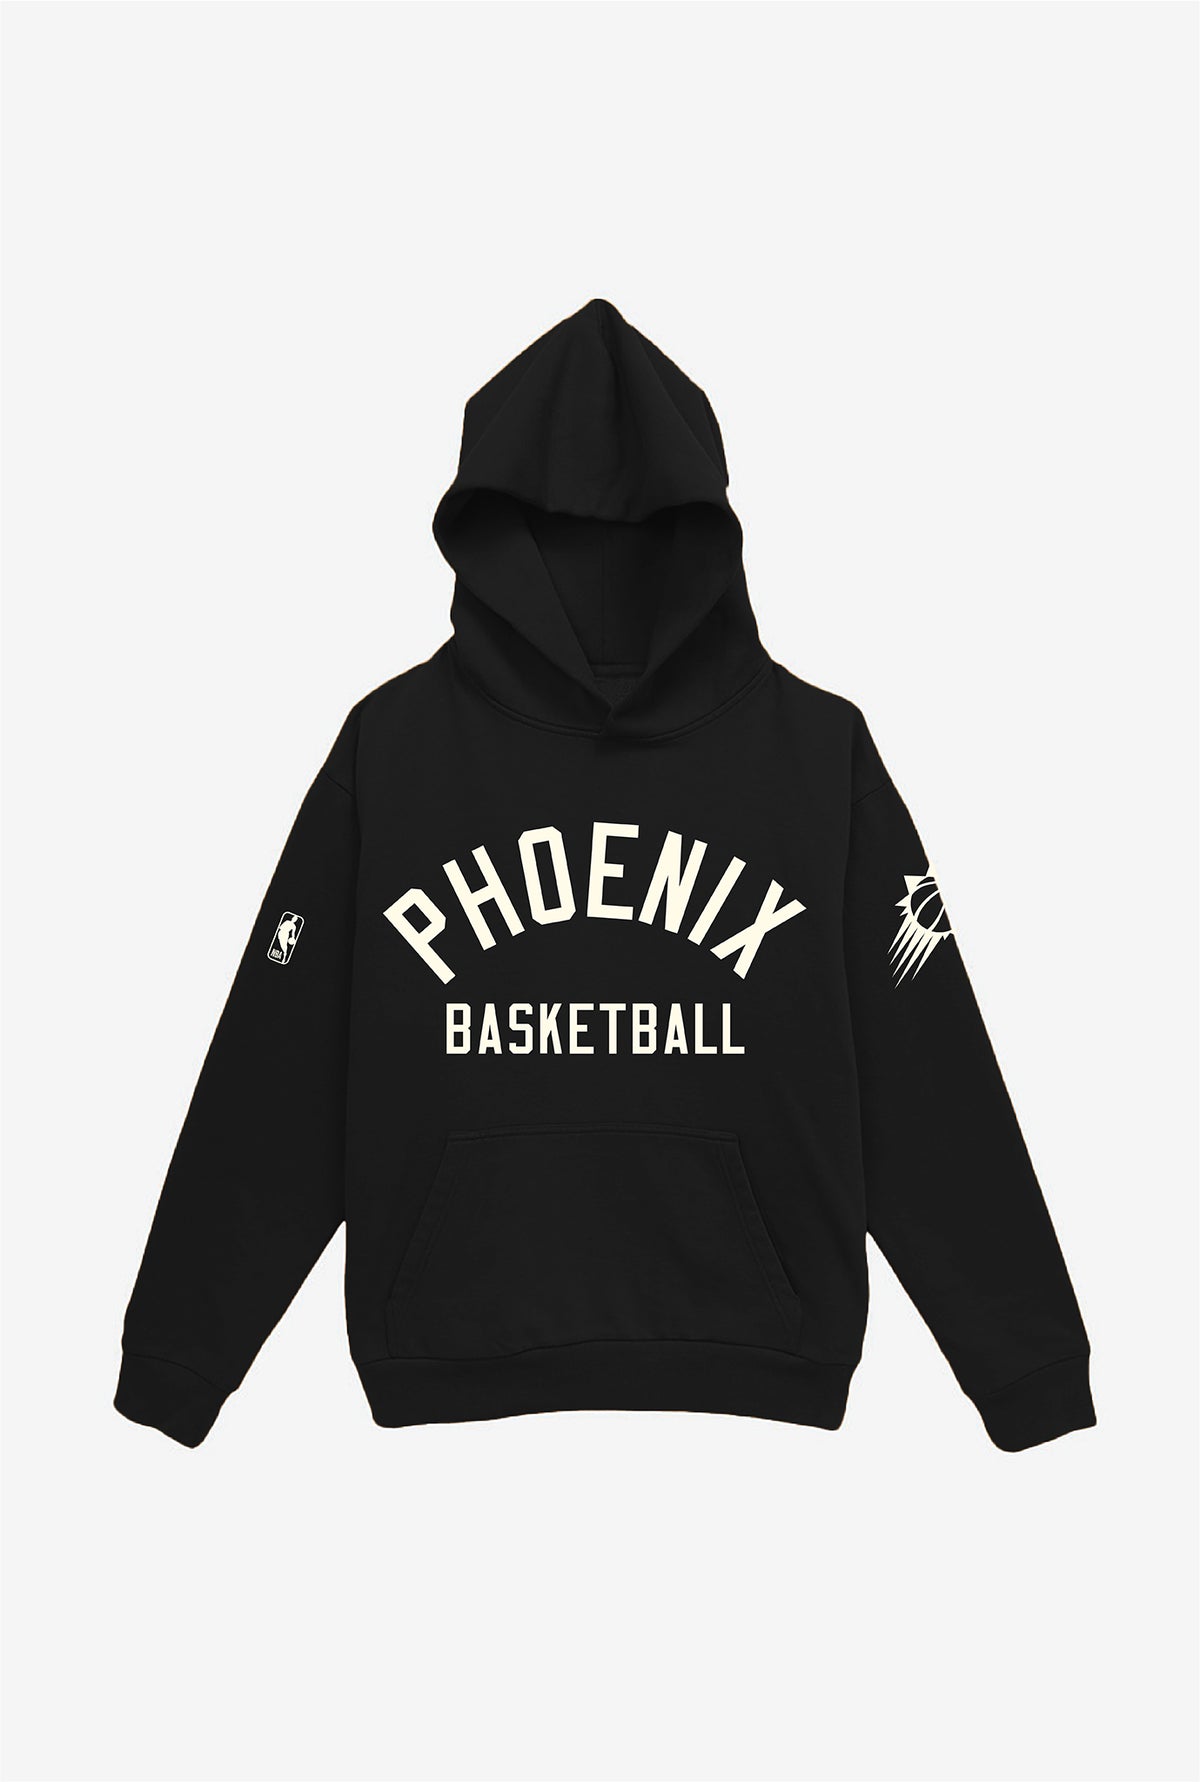 Phoenix Suns Heavyweight Hoodie - Black